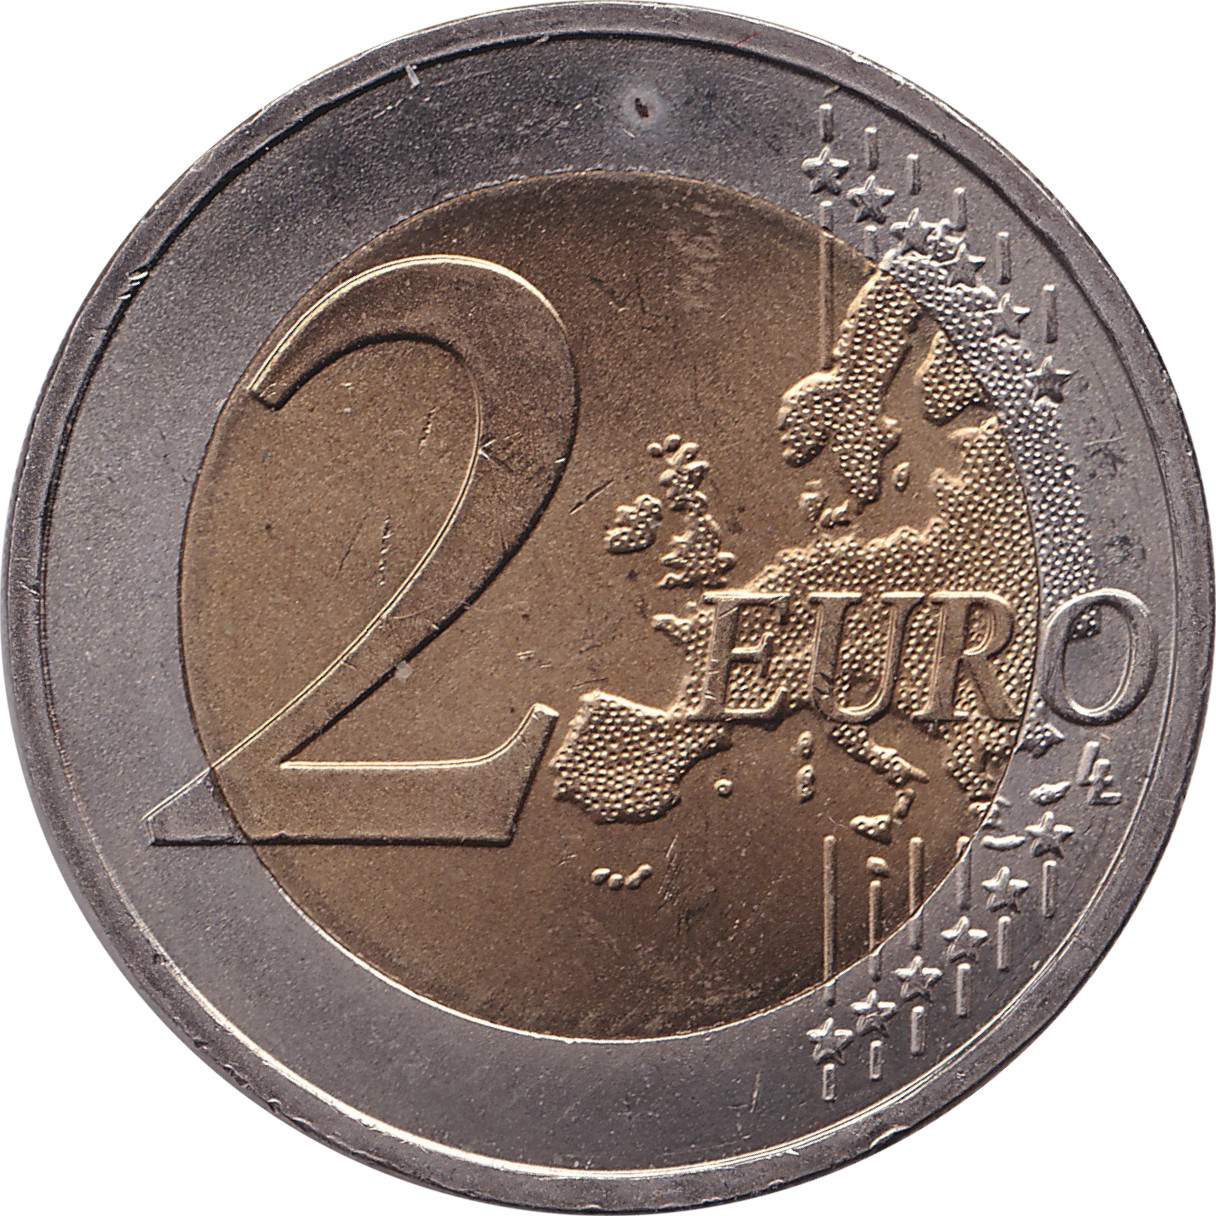 2 euro - Mecklemburg-Pomerania